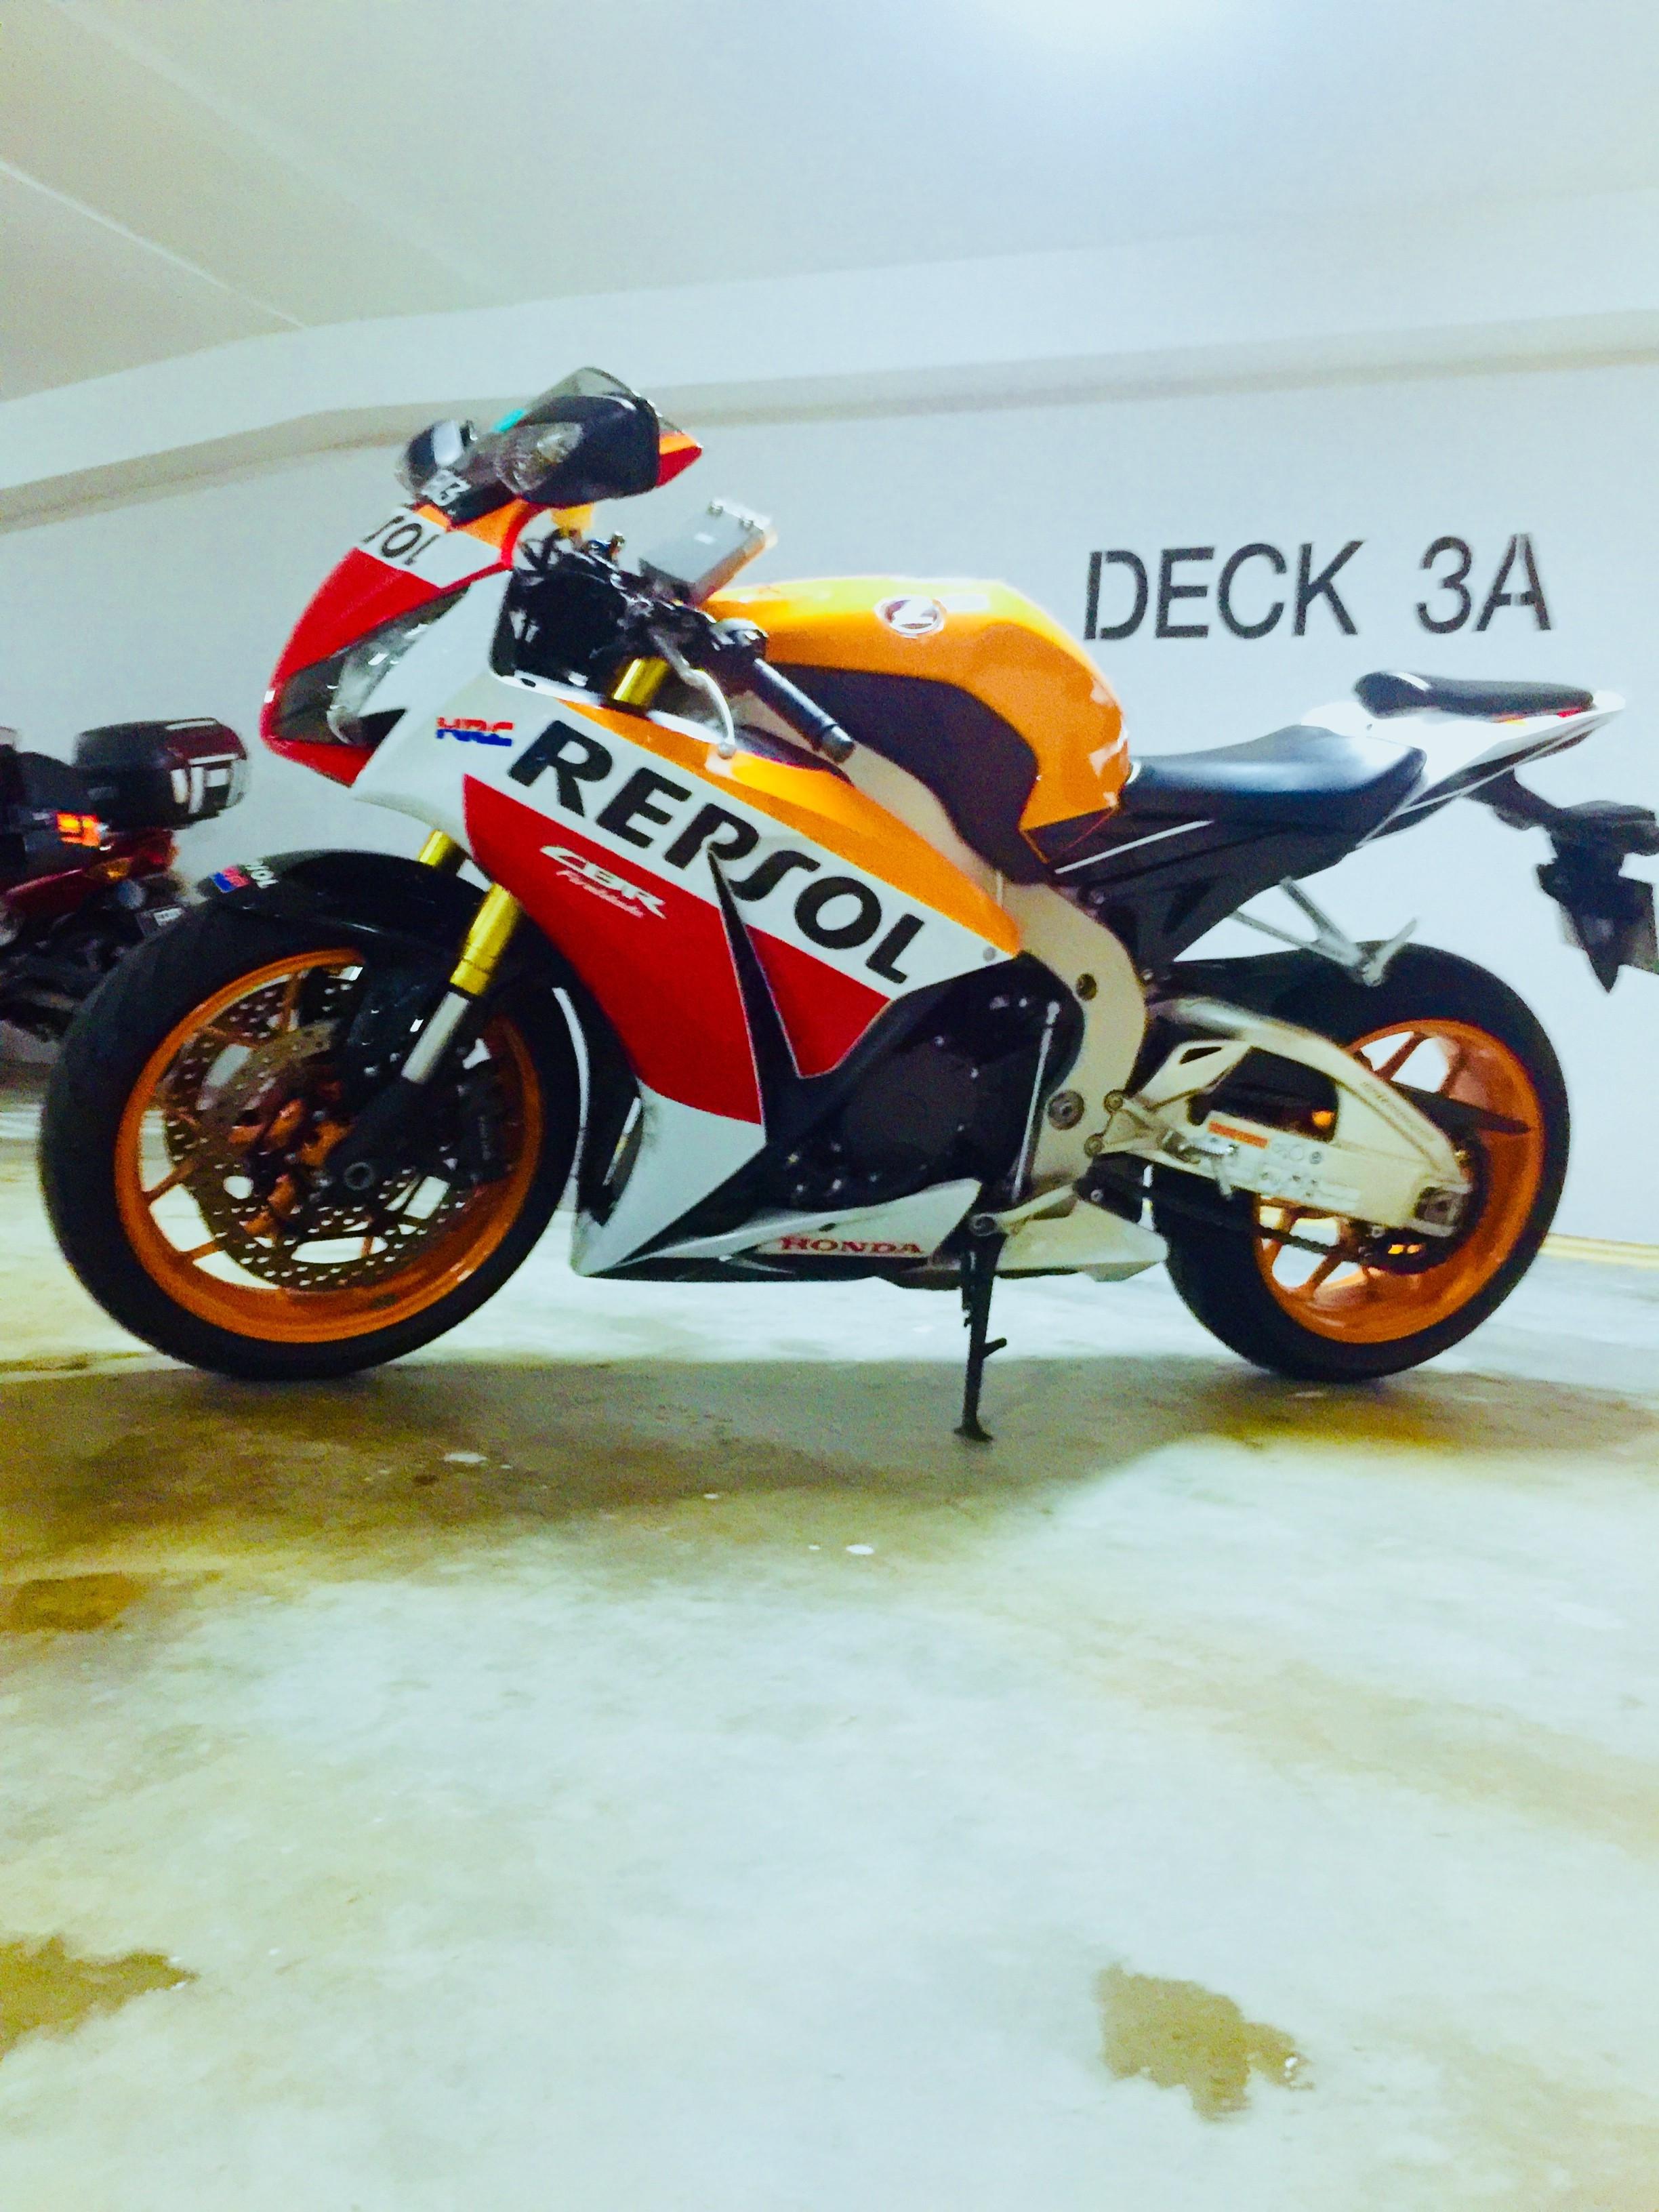 Honda Cbr1000rr 2015 repsol!!!, Motorbikes, Motorbikes for ...